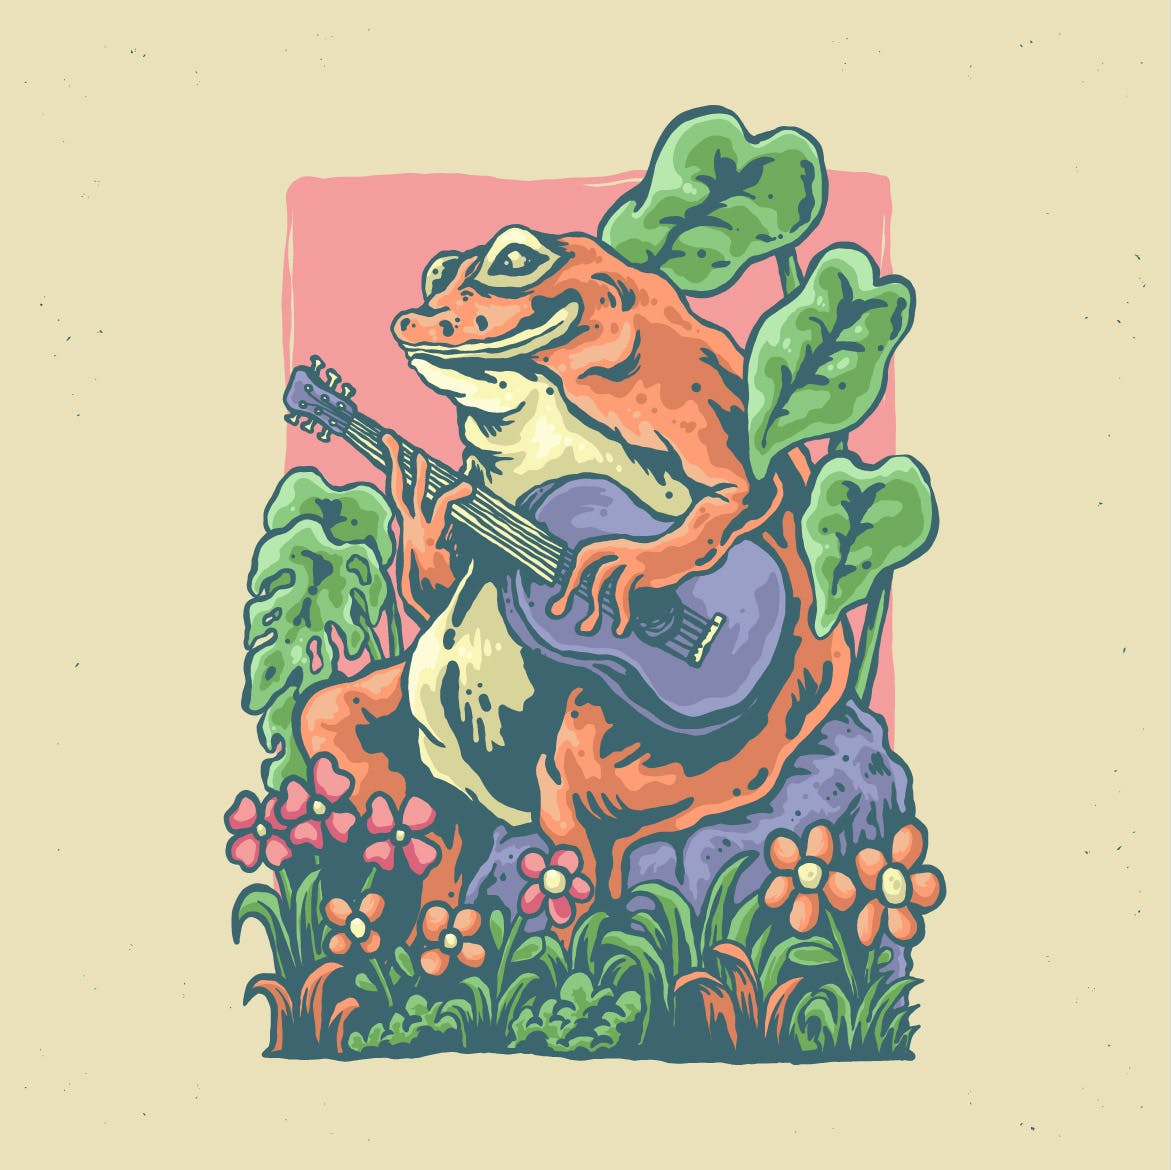 弹吉他青蛙设计插画 illustration of frog playing guitar design 图片素材 第2张